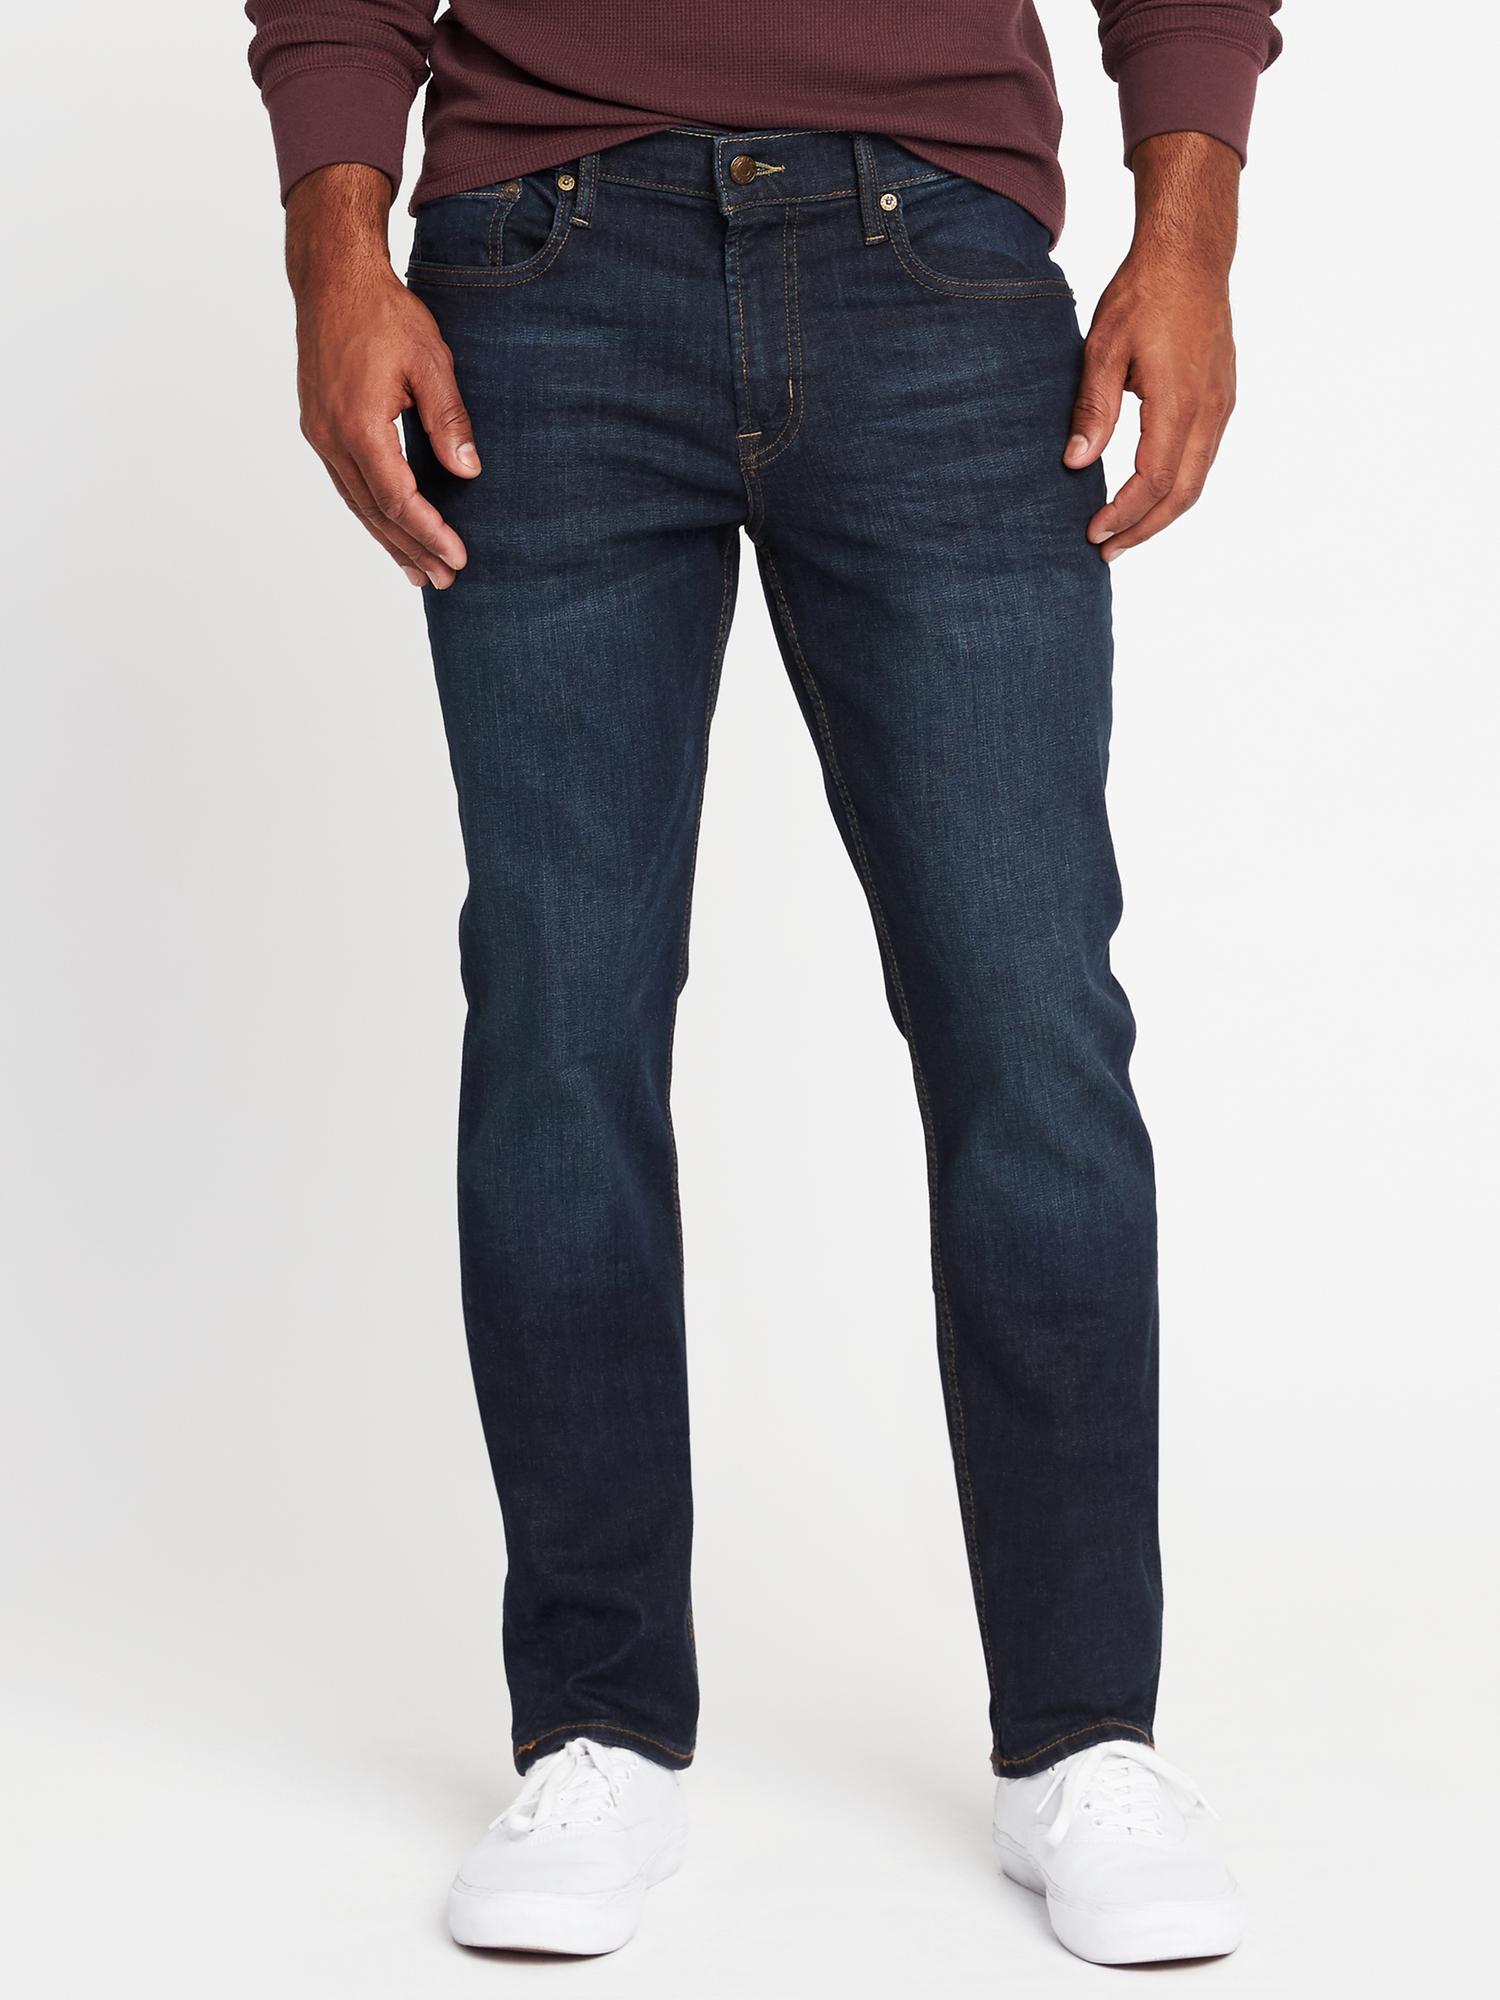 Slim Built-In Flex Max Jeans for Men | Old Navy